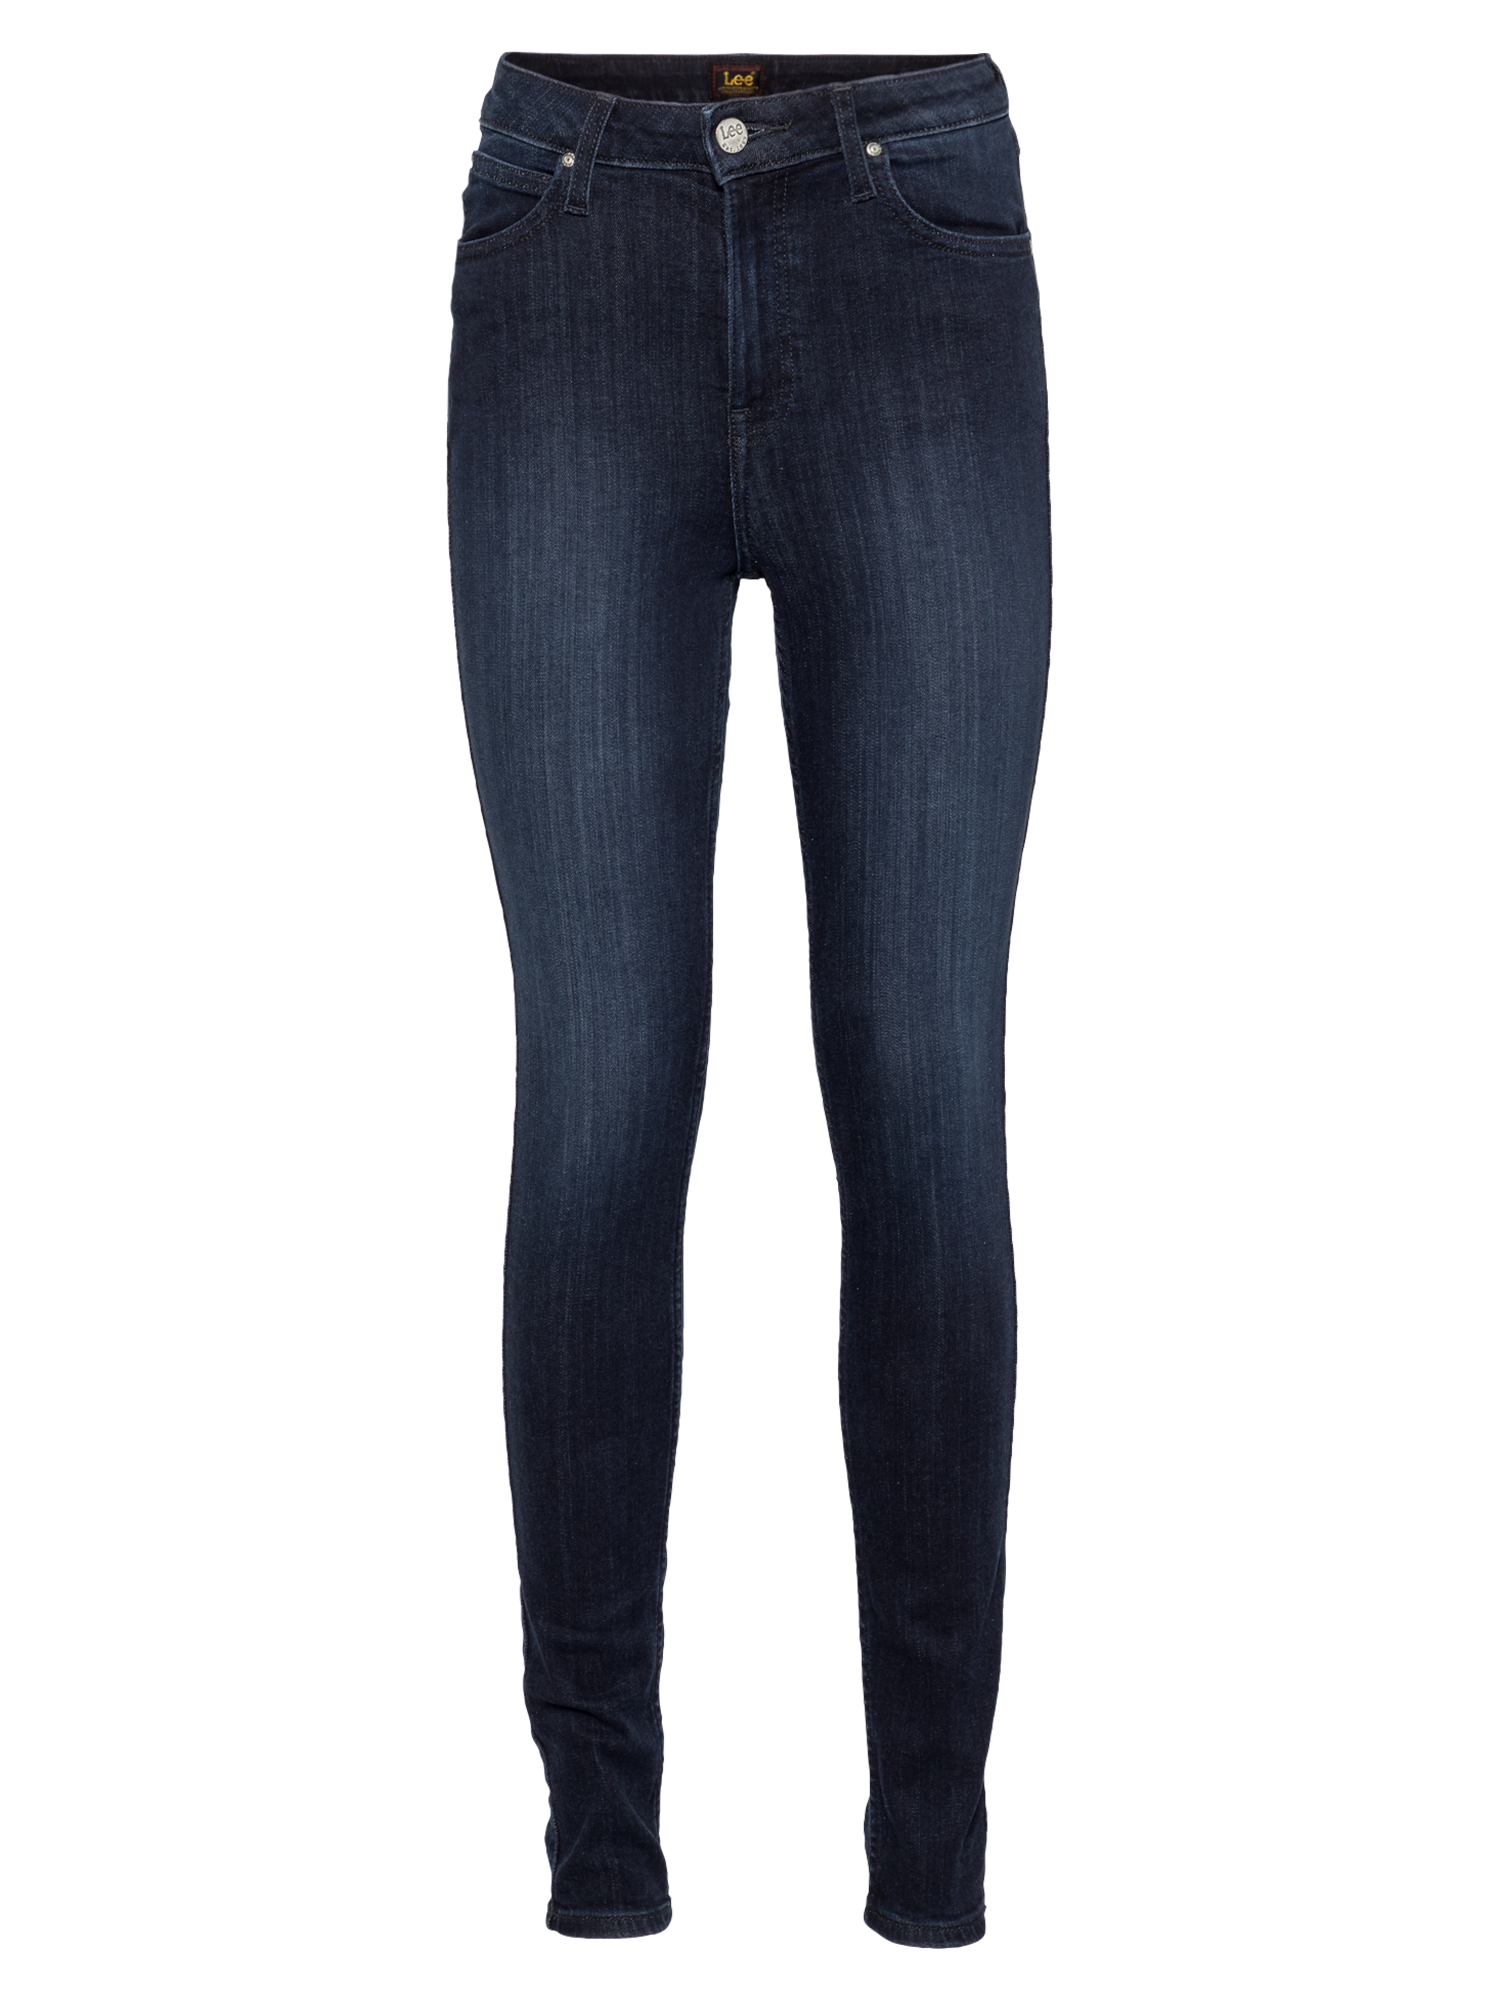 PROMO Jeans & pantaloni Lee Jeans IVY in Blu Scuro 